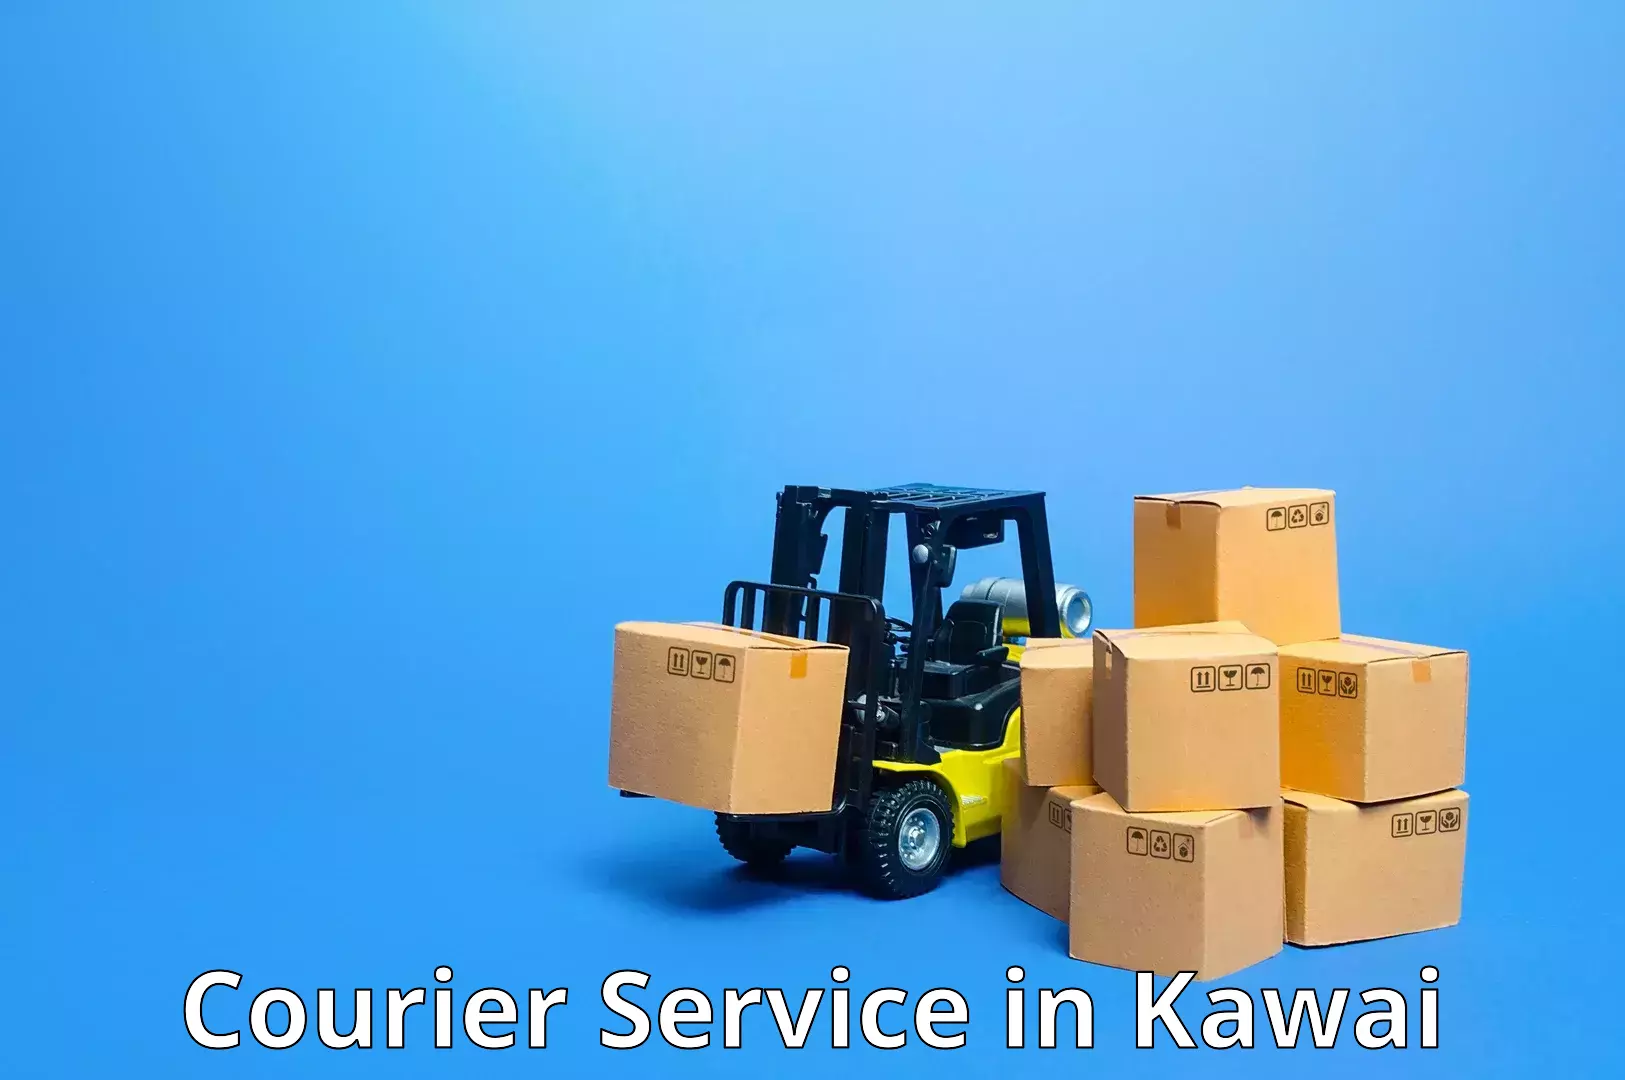 Speedy delivery service in Kawai